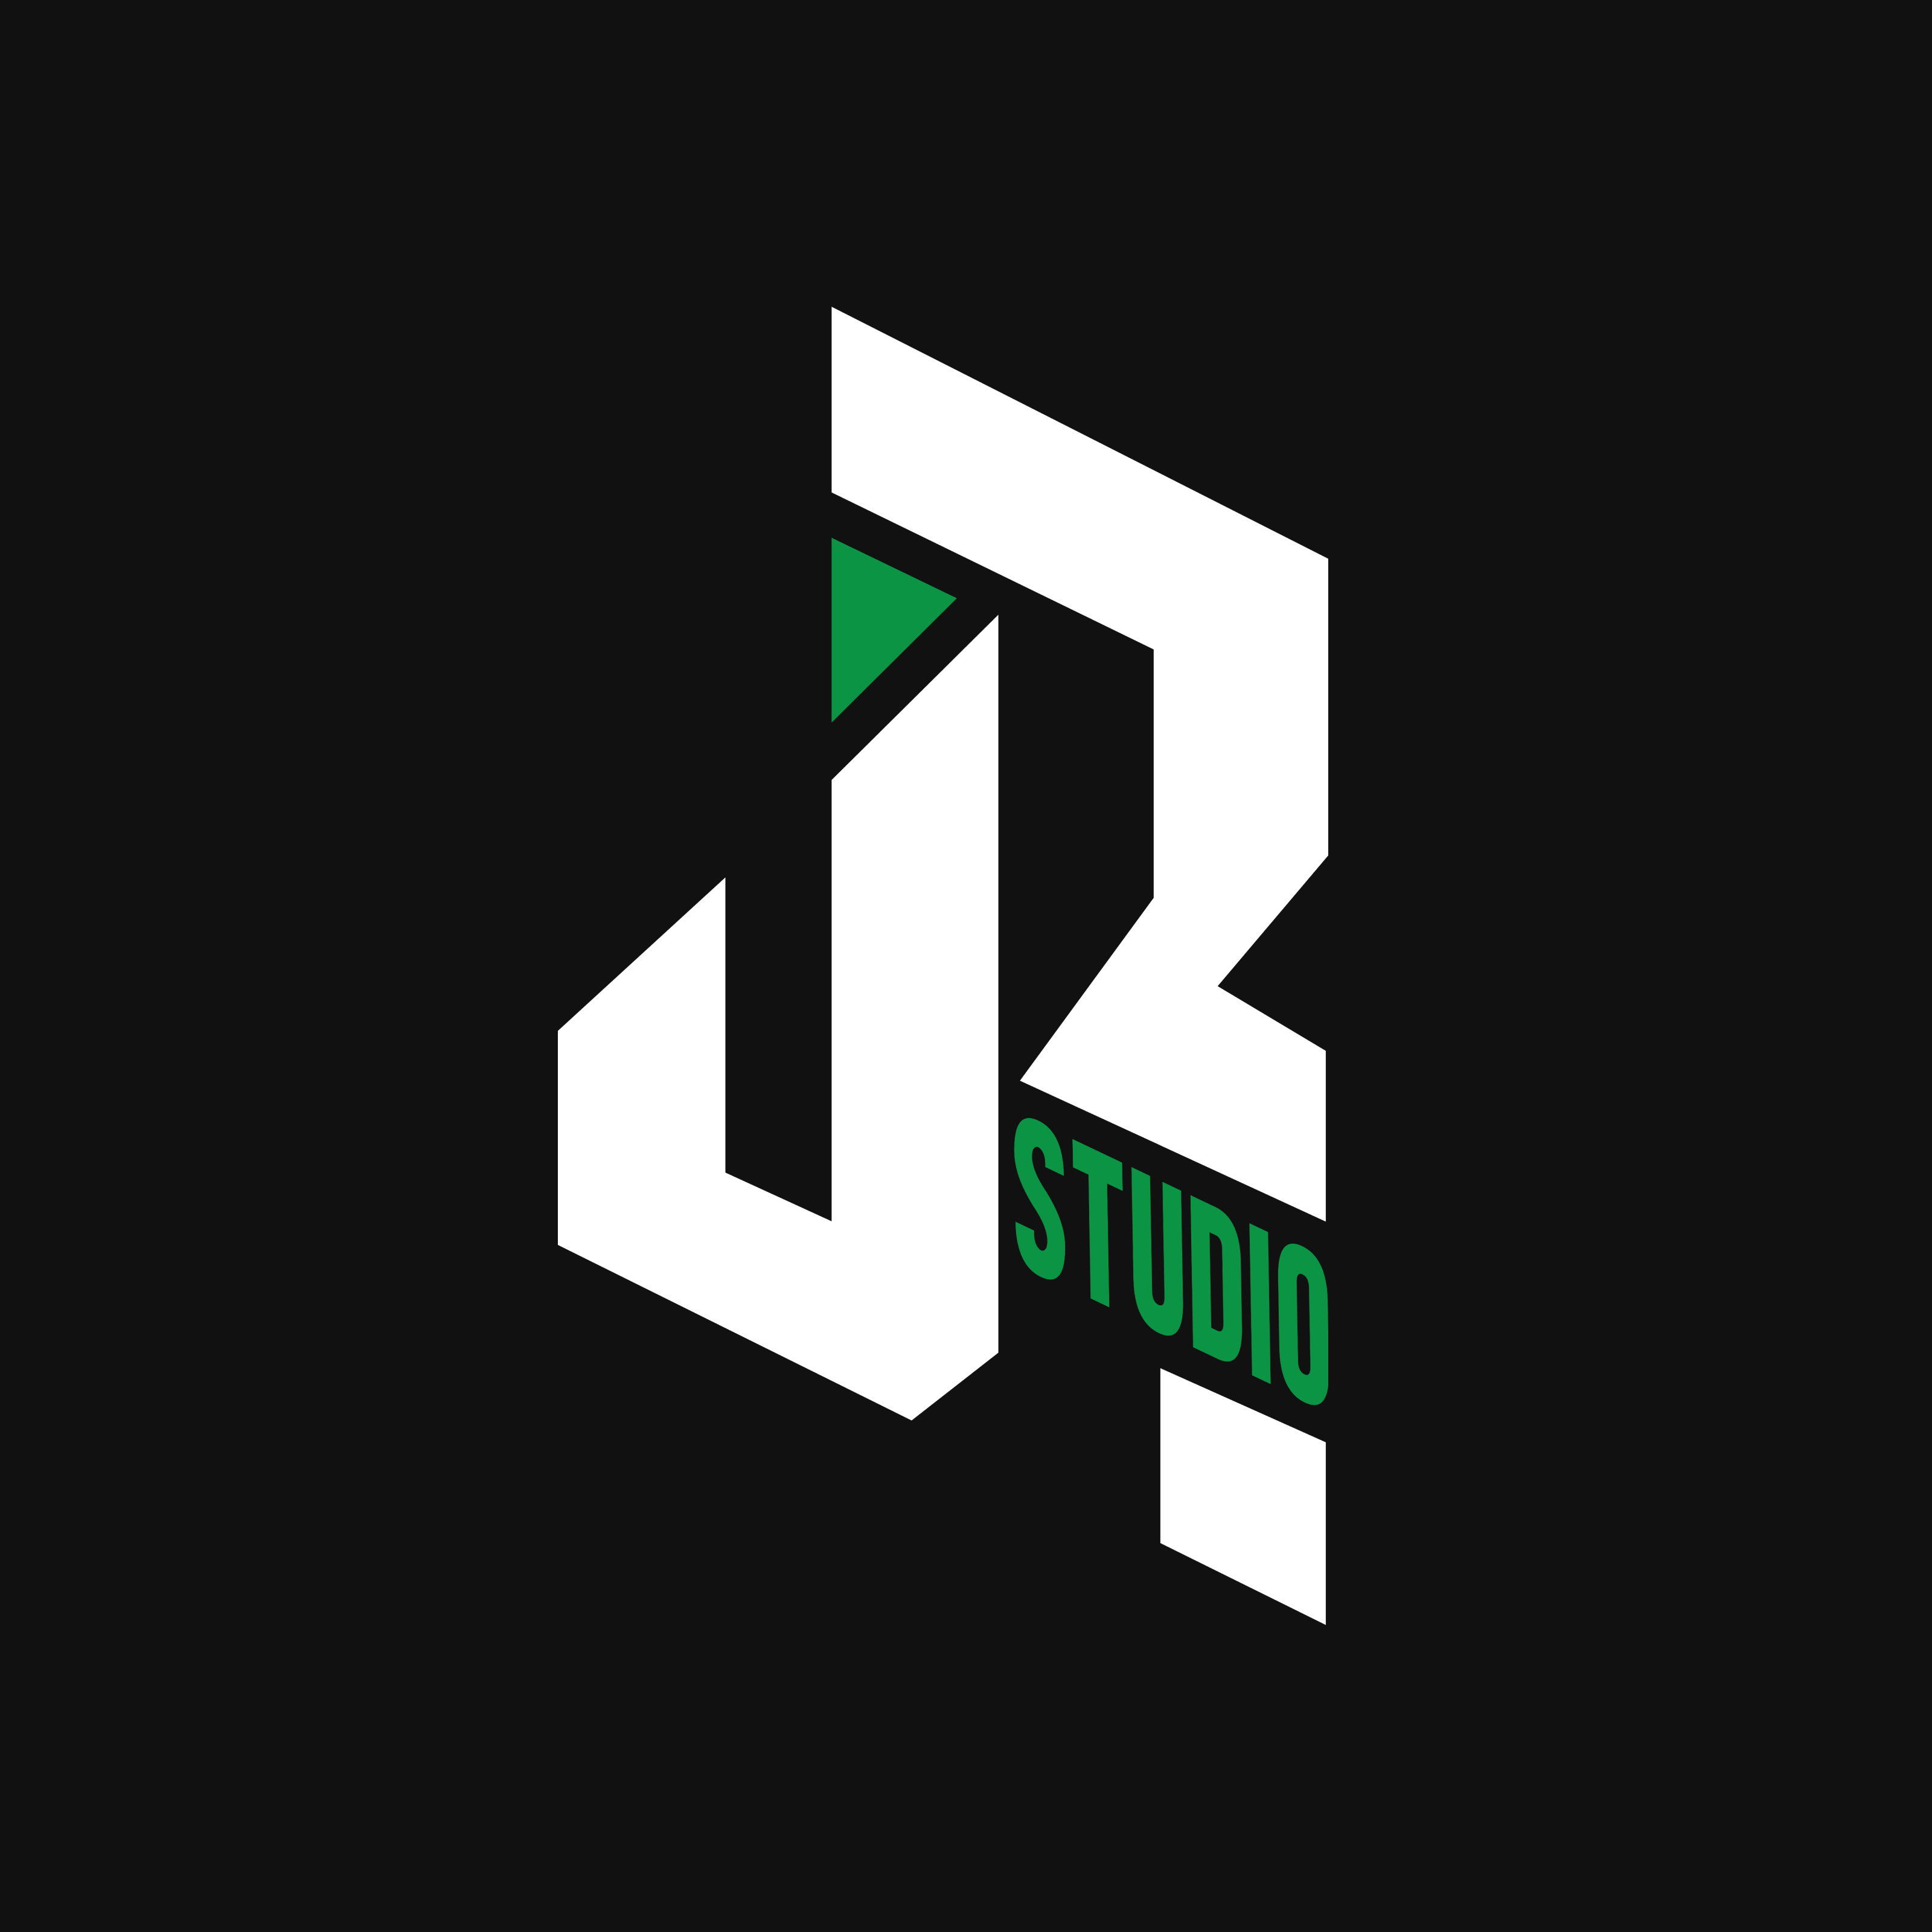 JR Studio's Game Hub logo